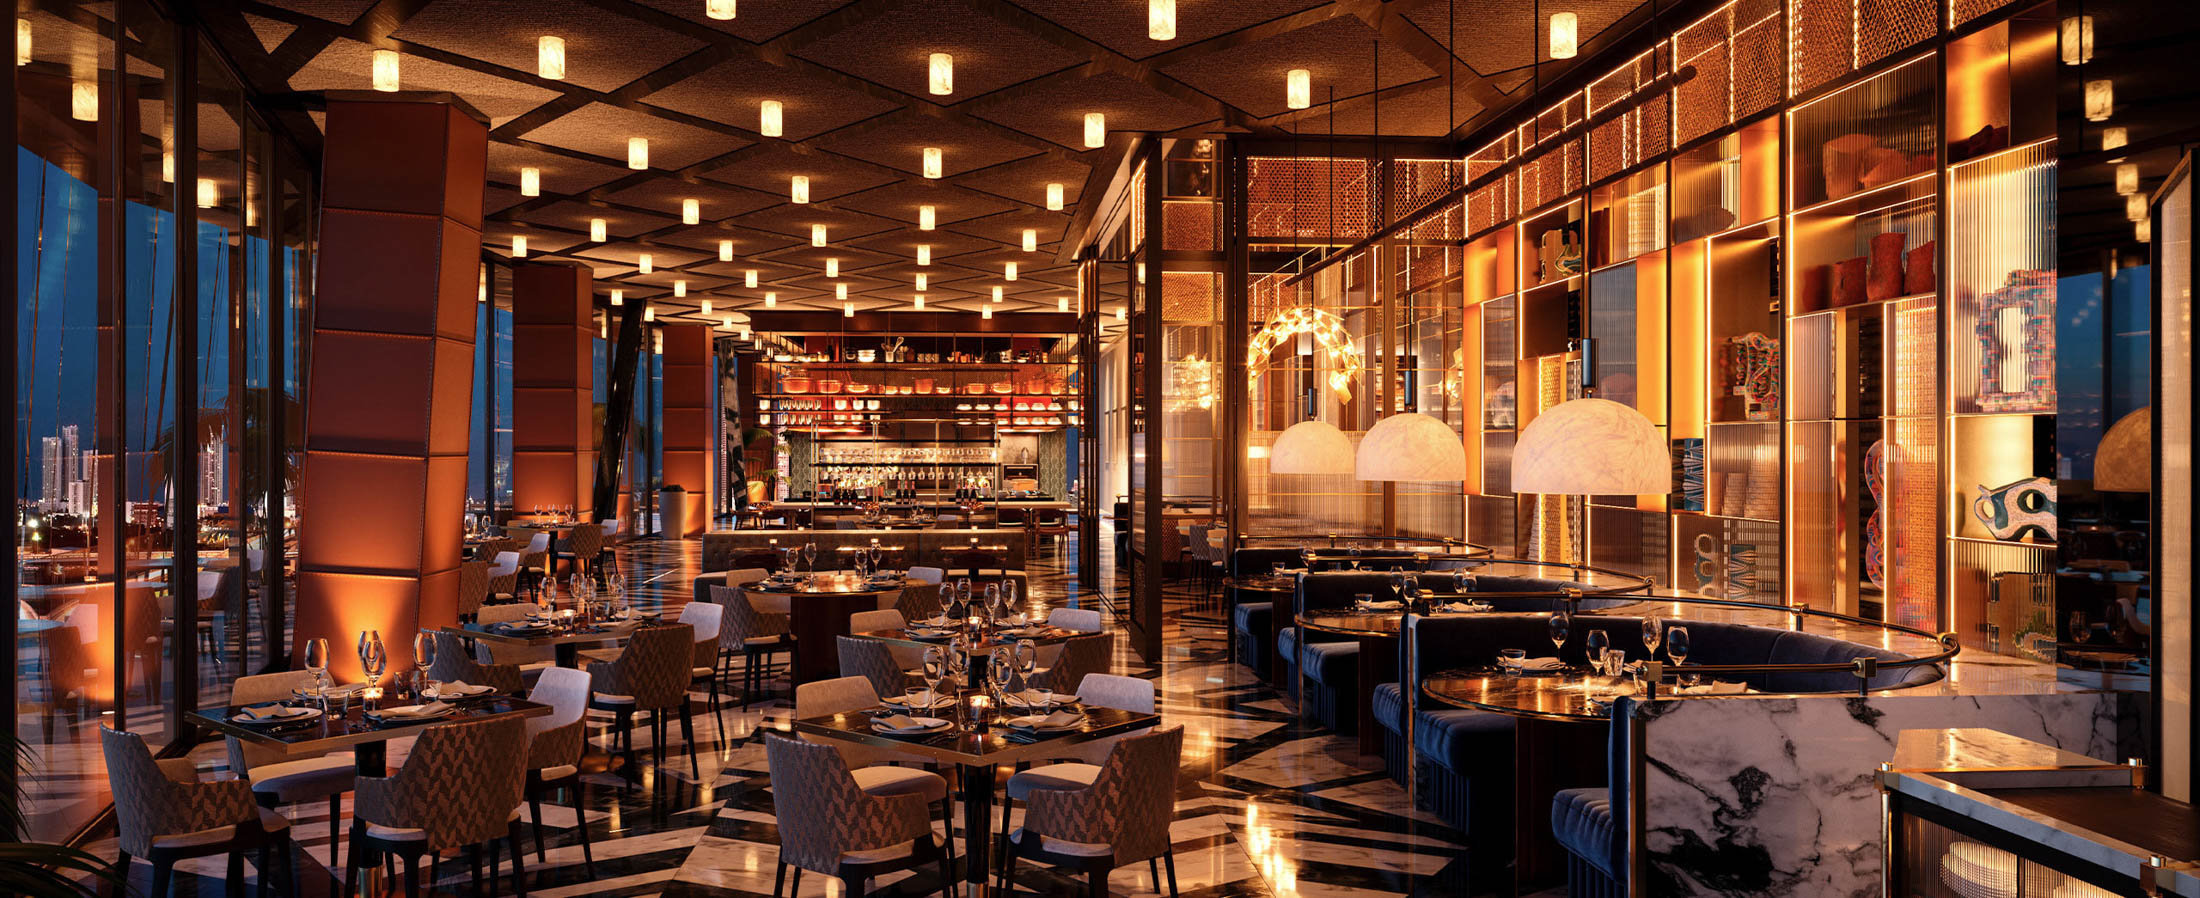 The Ritz-Carlton, Mexico City Hotel – Mexico City, Mexico – Samos Restaurant and Bar